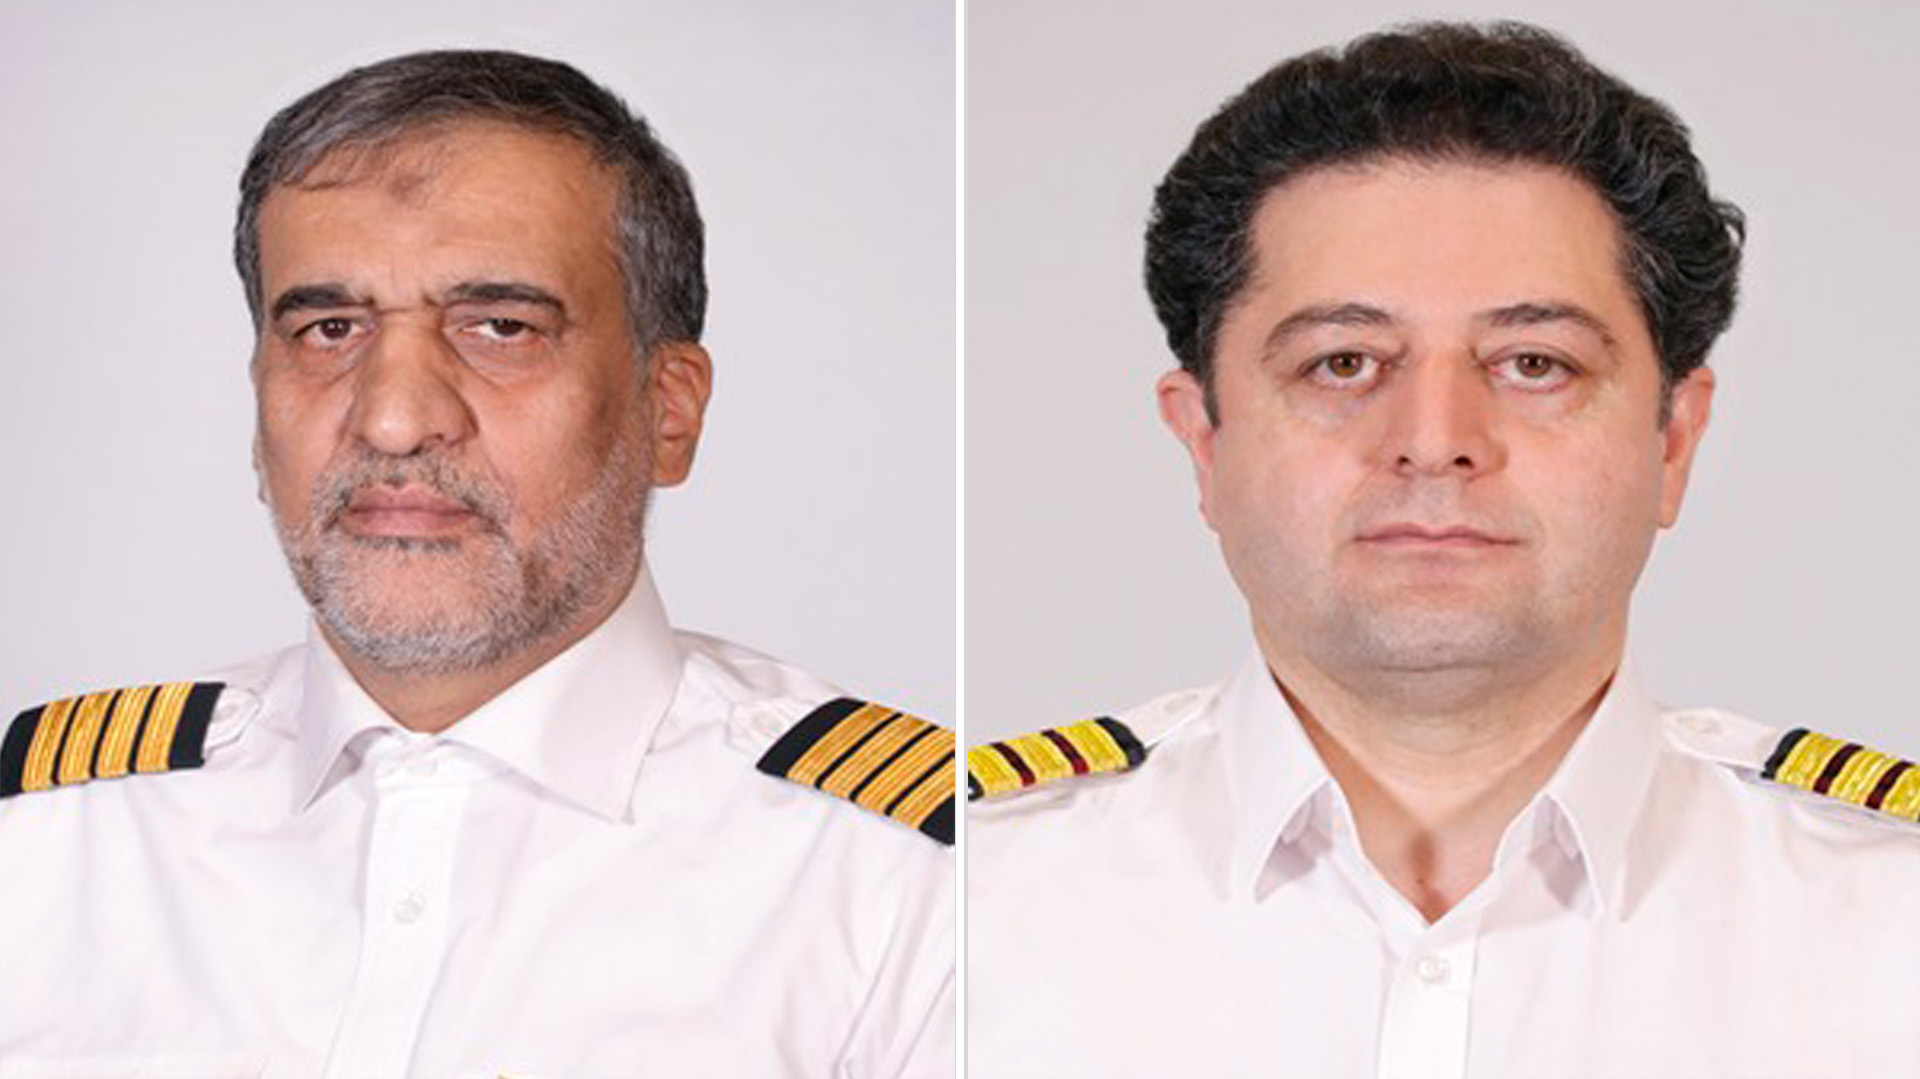 Piloto y copiloto, bajo sospecha. A la izquierda, Gholamreza Ghasemi, vinculado a la Fuerza Quds. A la derecha, Mahdi Museli.
